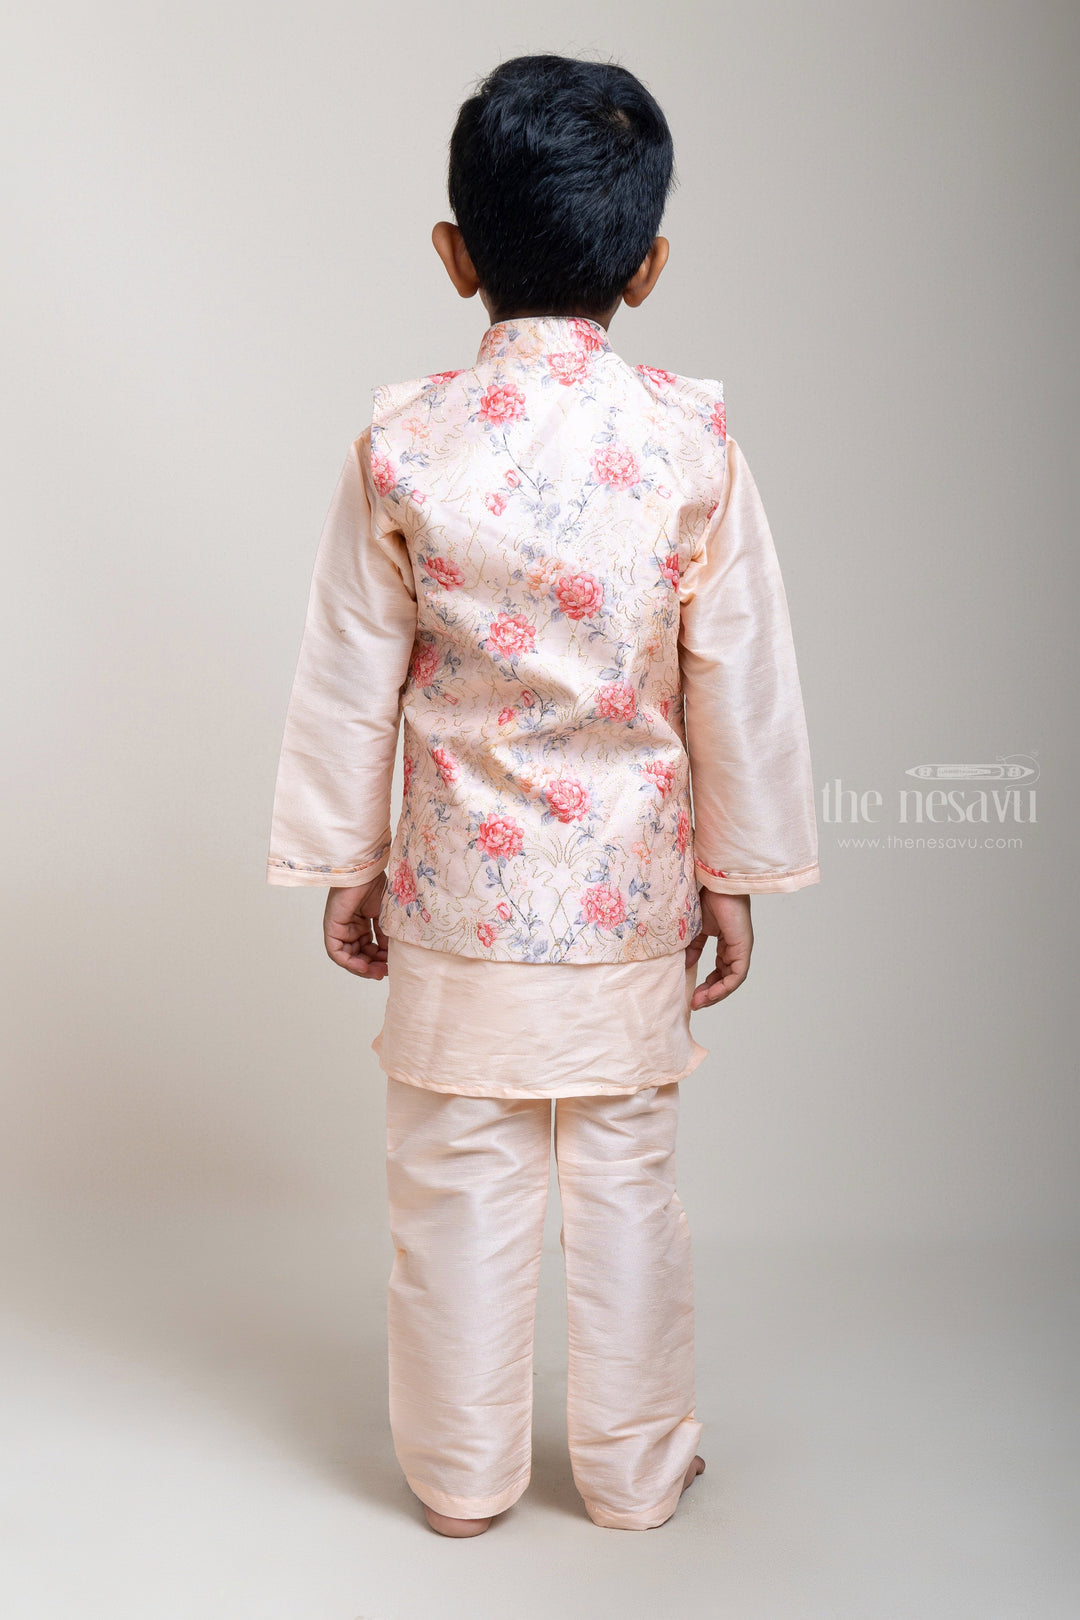 The Nesavu Boys Jacket Sets Perfect Pink Three Piece Kurta And Floral Printed Overcoat For Little Boys psr silks Nesavu